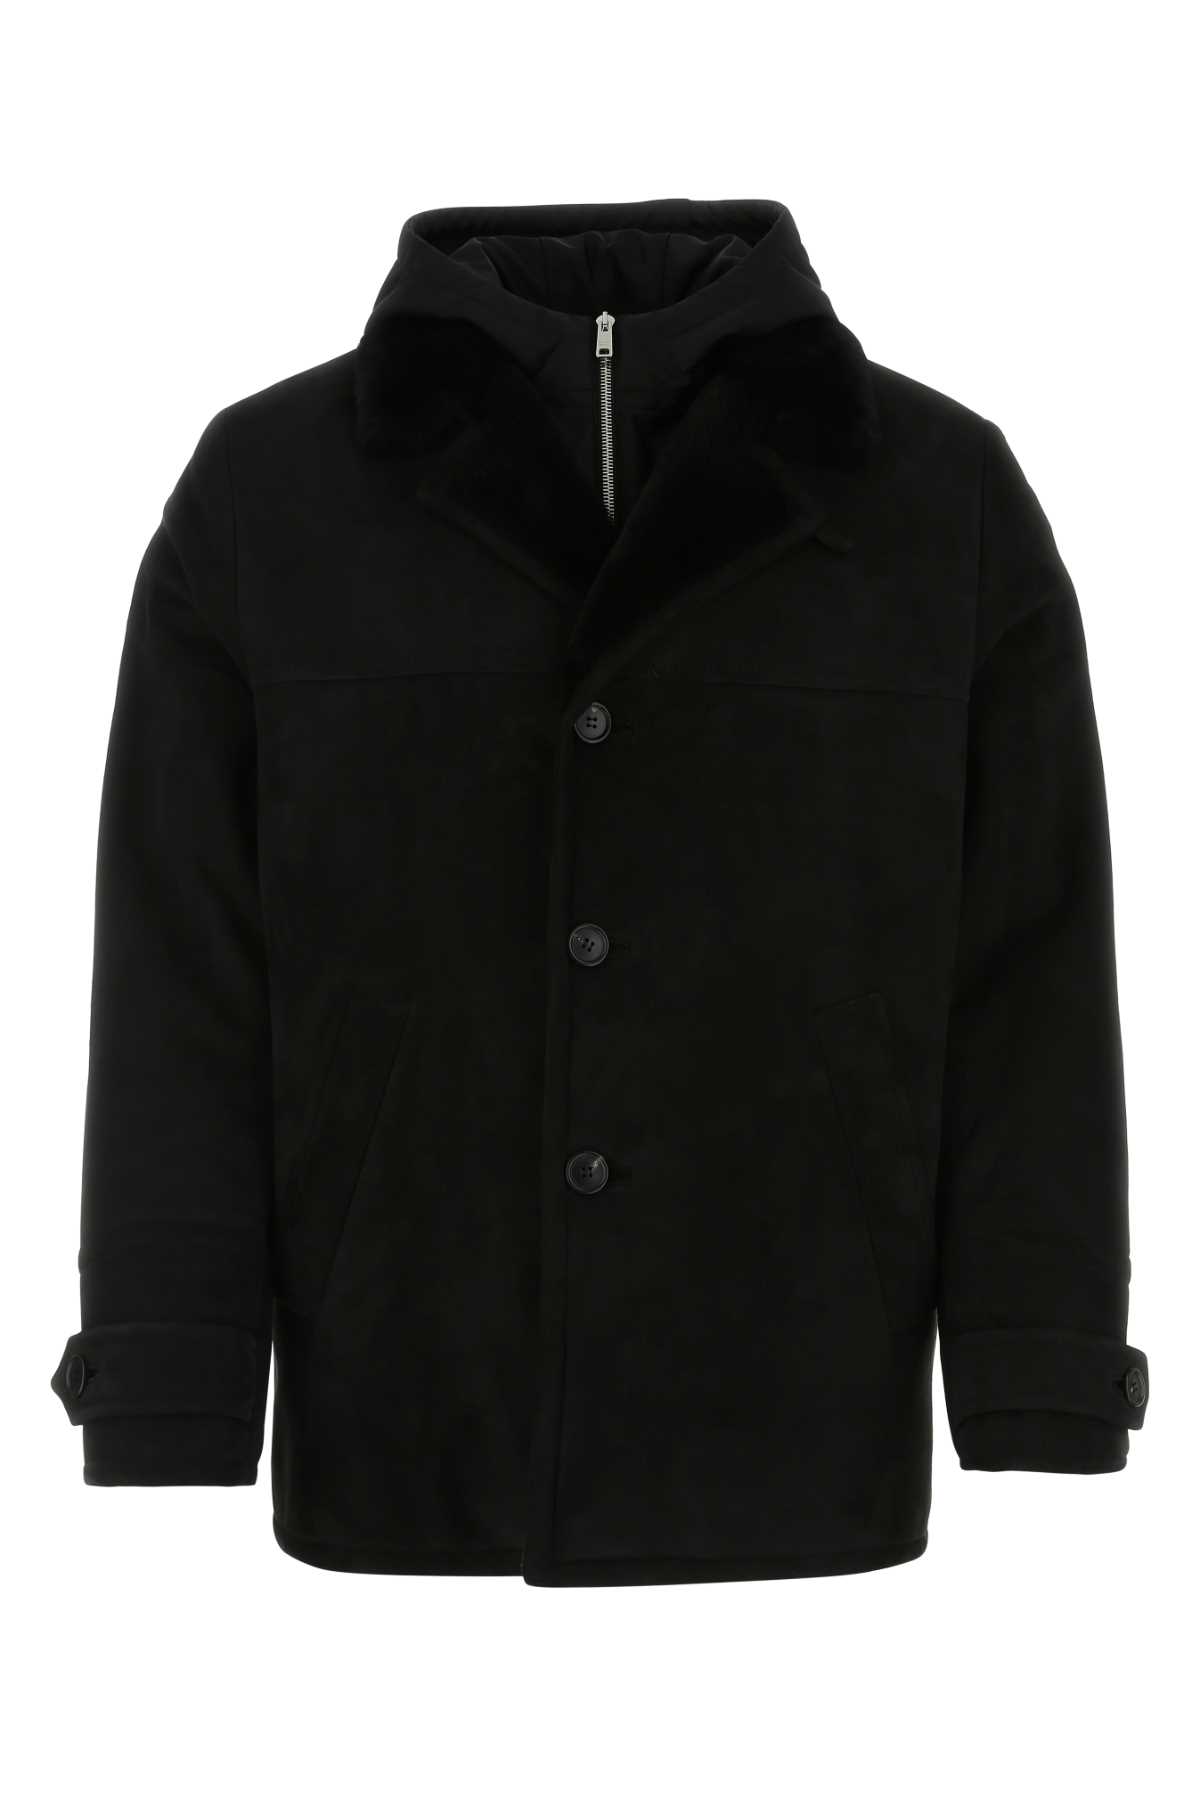 Prada Black Shearling Jacket